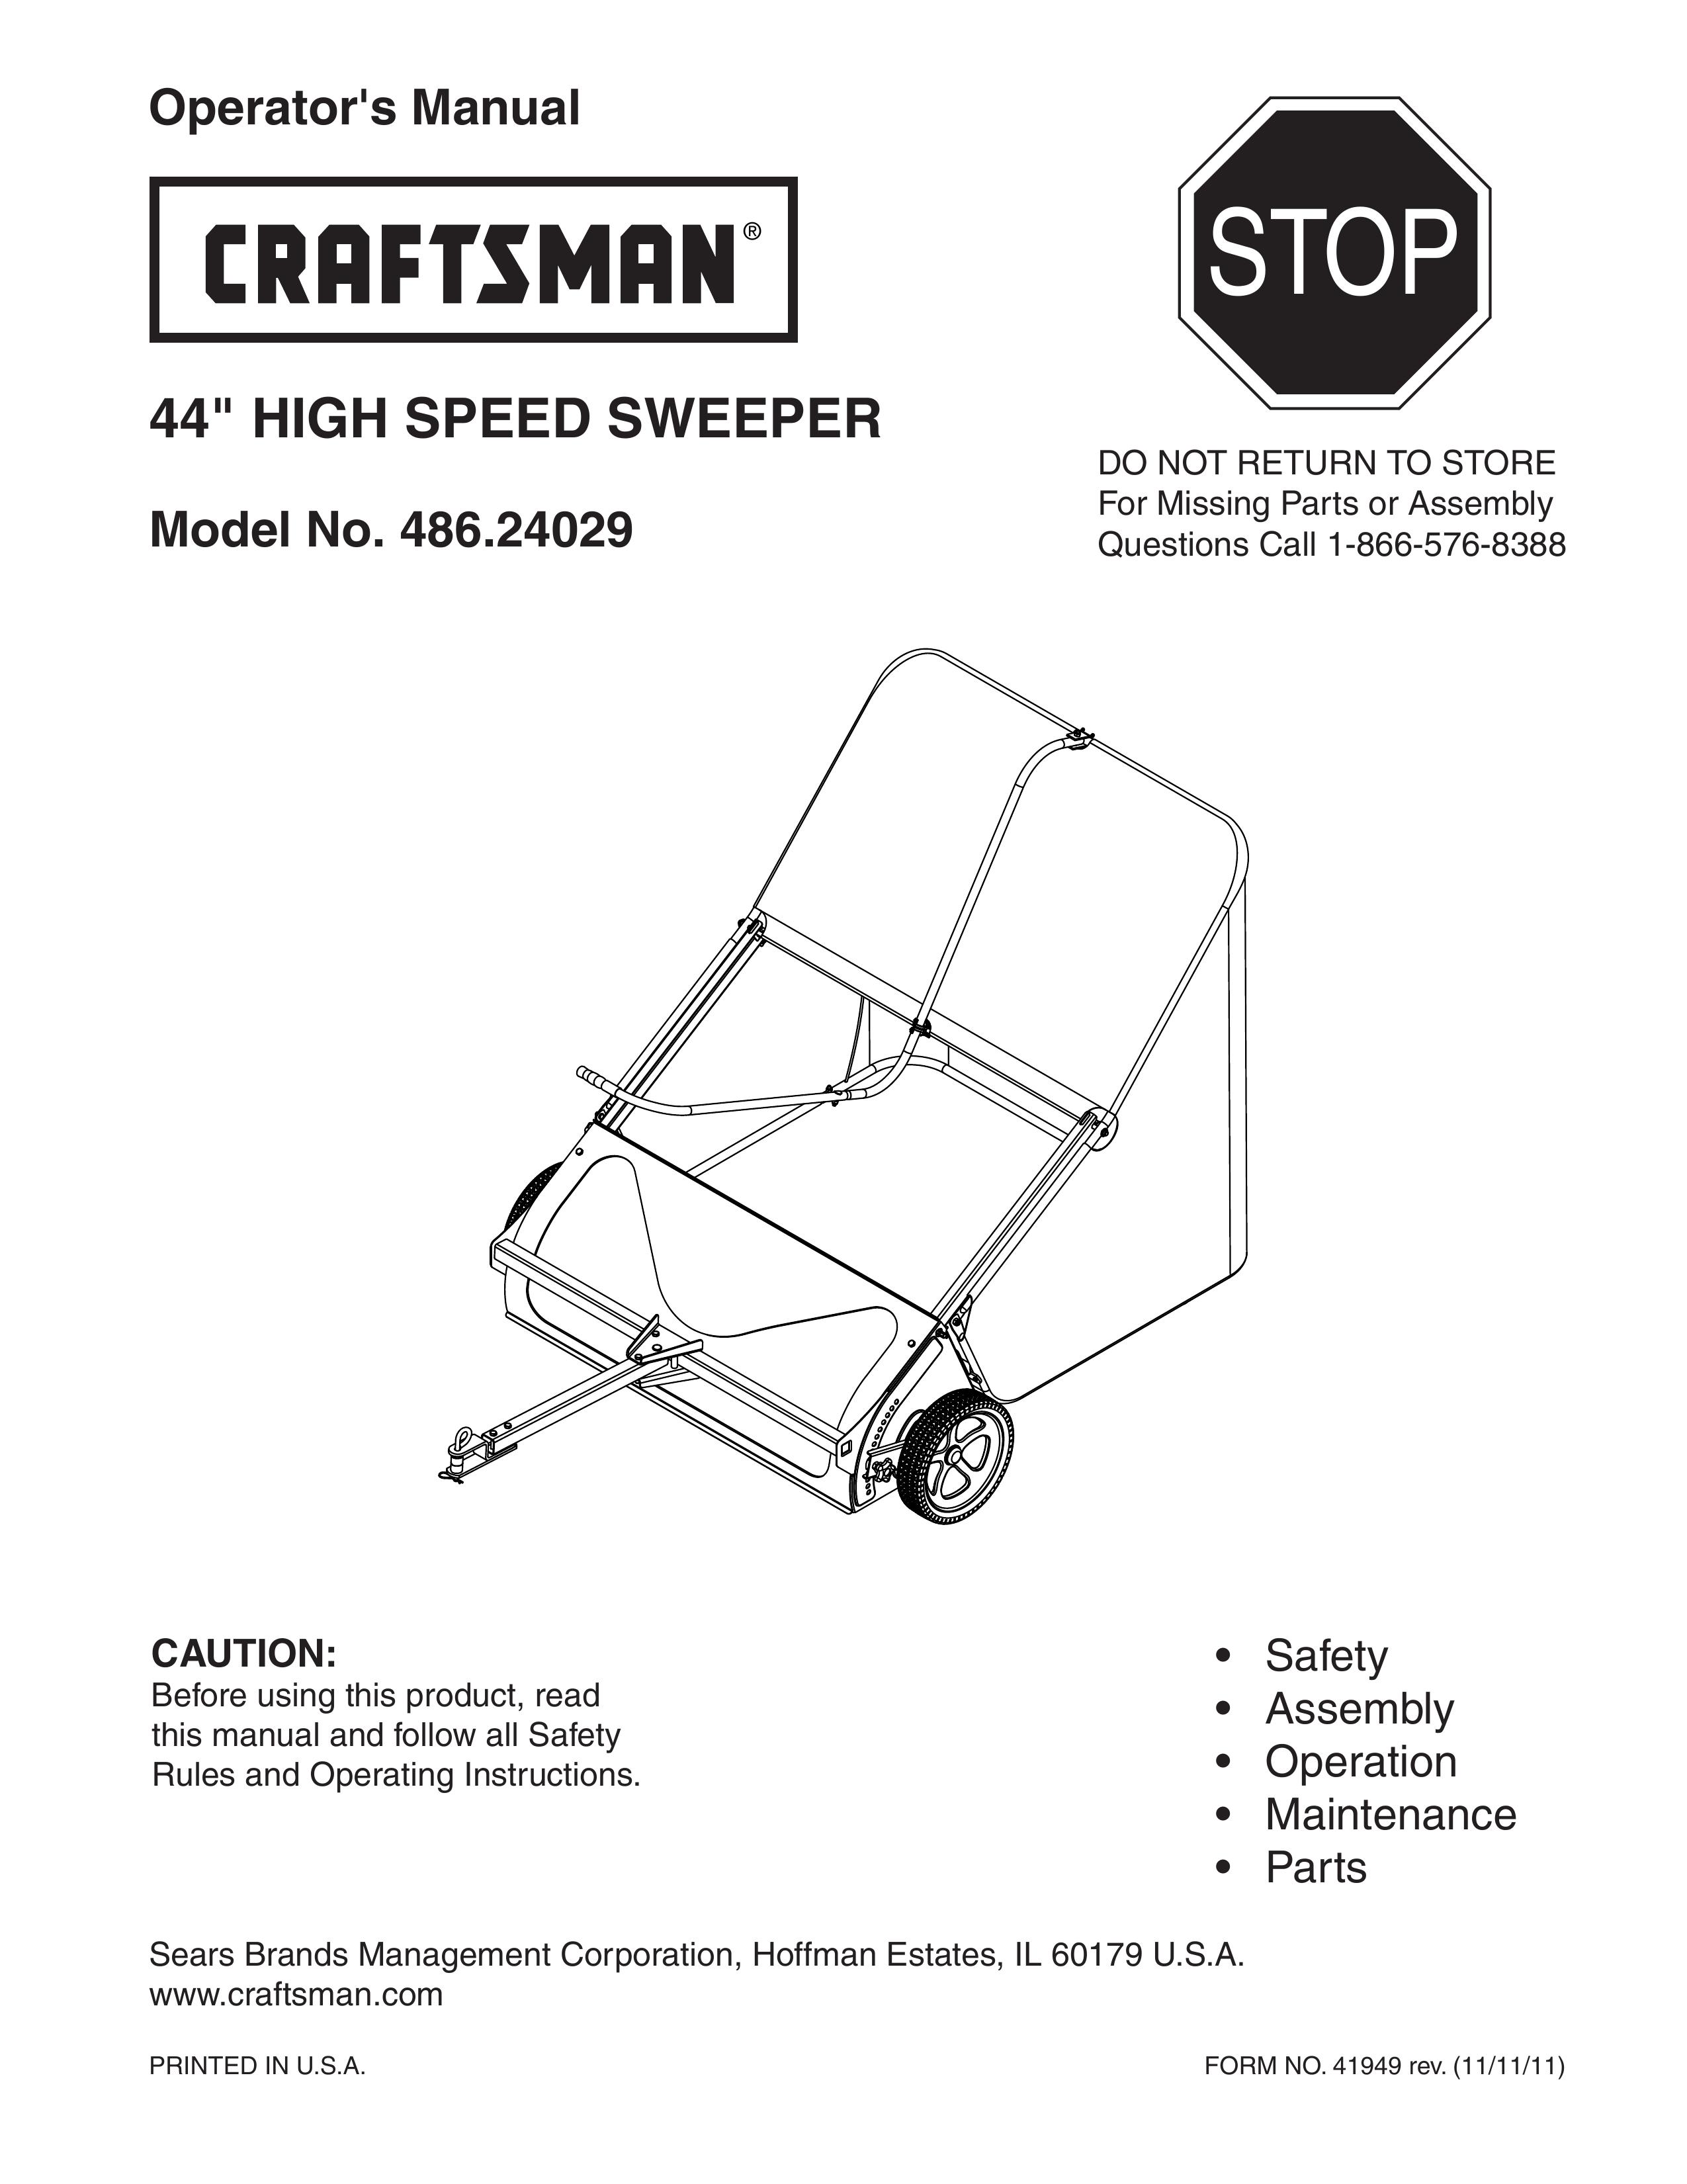 Craftsman 486.24029 Lawn Sweeper User Manual